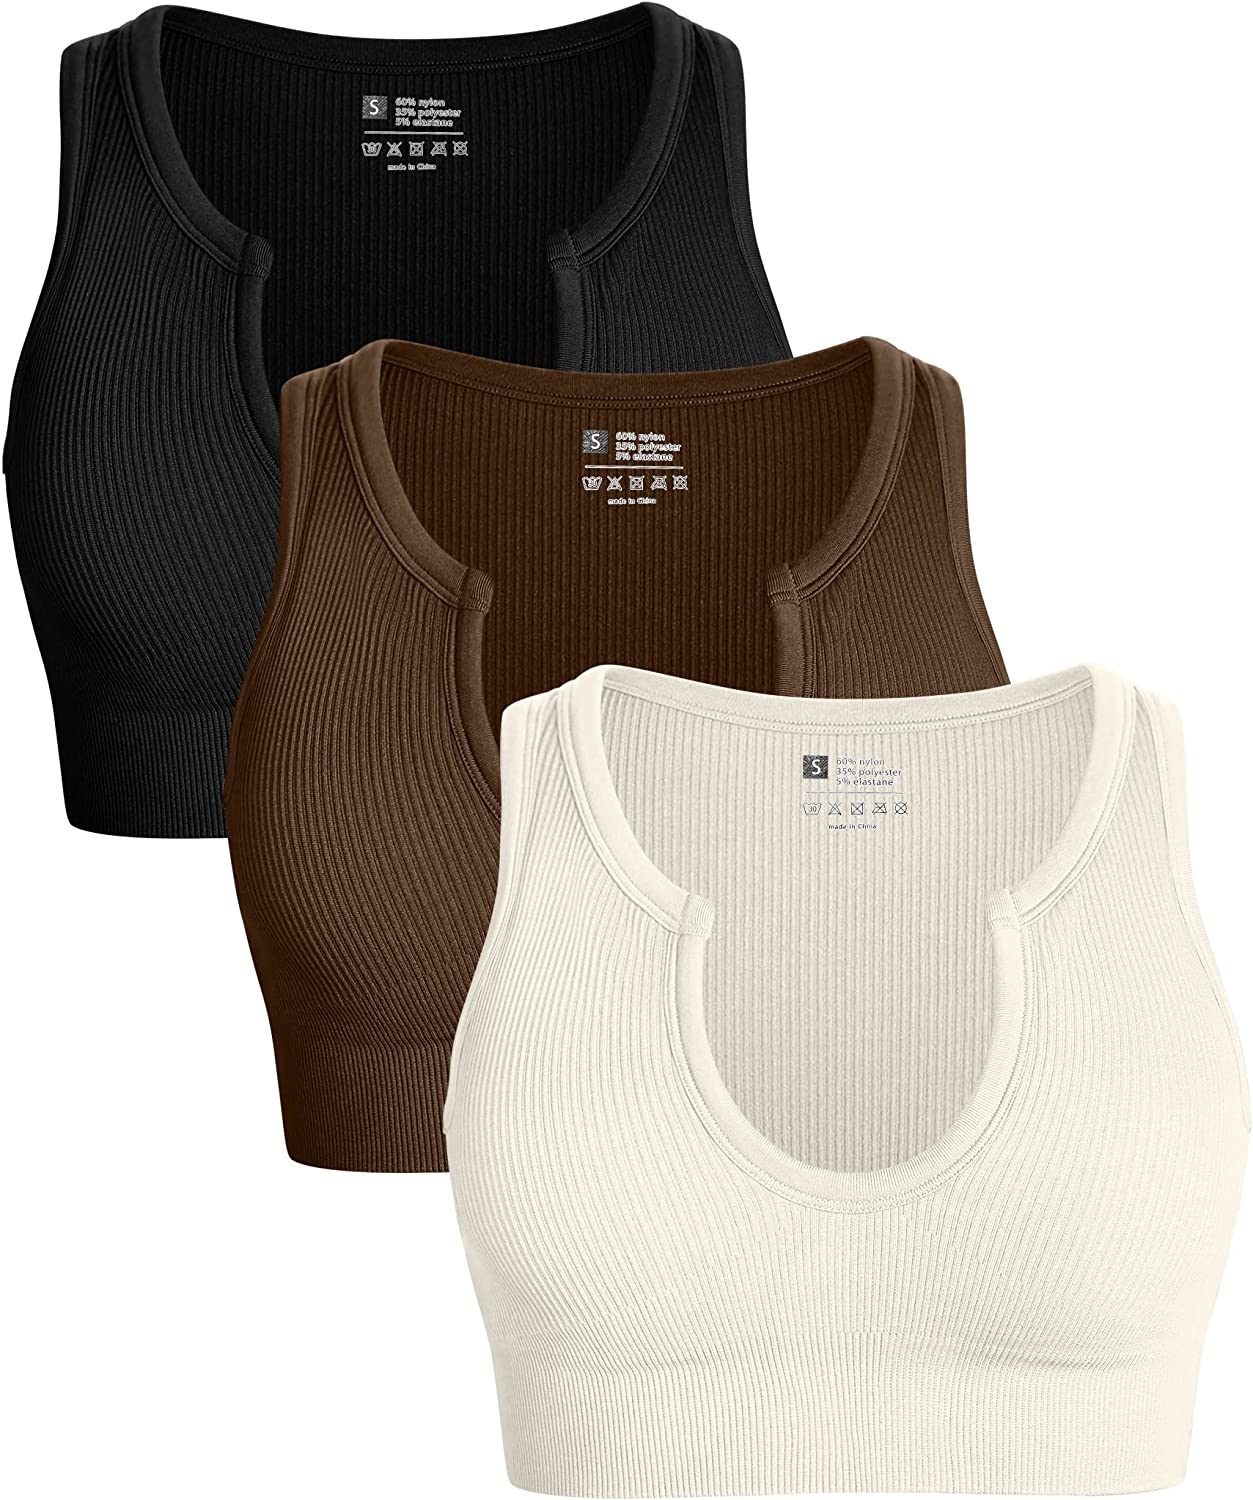 ASOS 4505 Yoga seamless rib contour medium support sports bra in